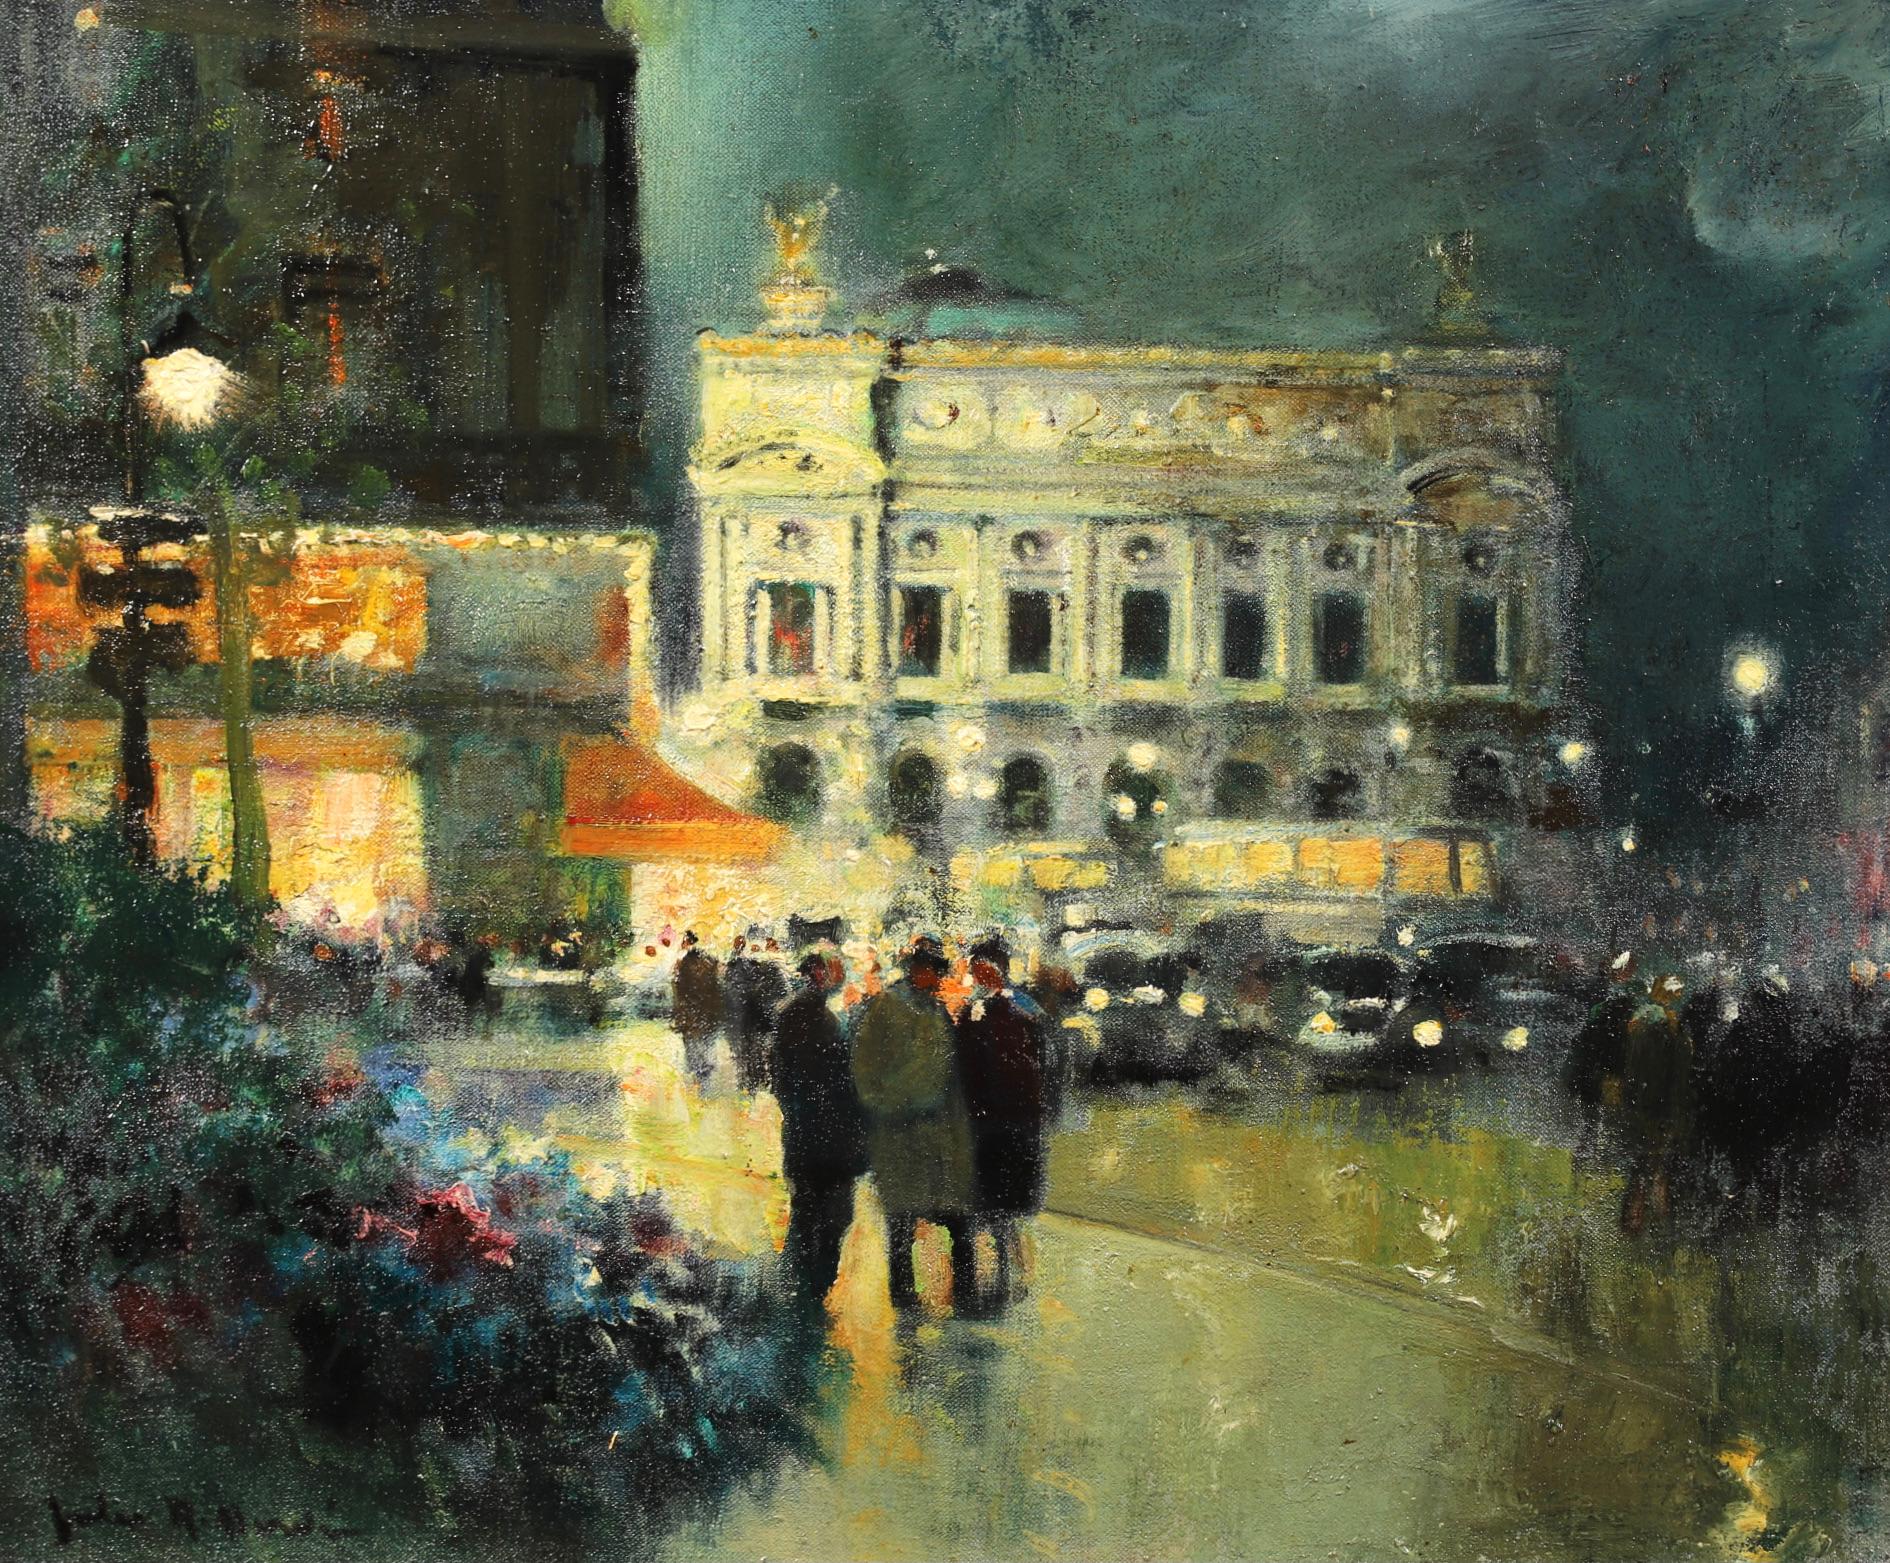 Evening - Place de l'Opera - Impressionist Cityscape Oil by Jules Rene Herve - Painting by Jules René Hervé